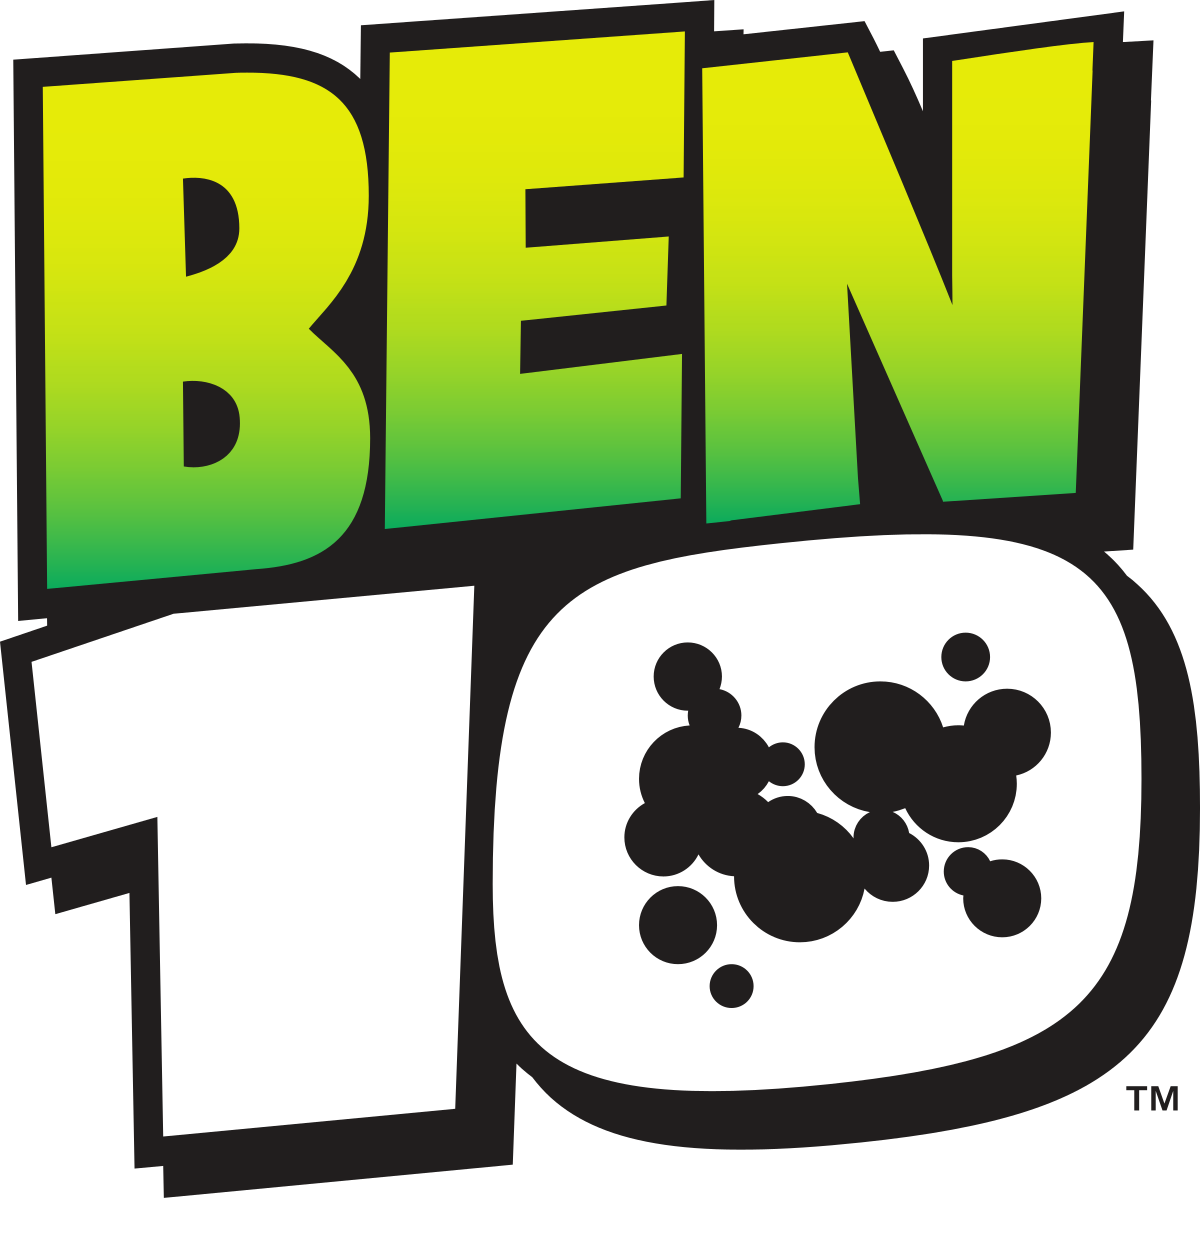 Ben 10 quiz (20 Ben 10 trivia questions and answers)